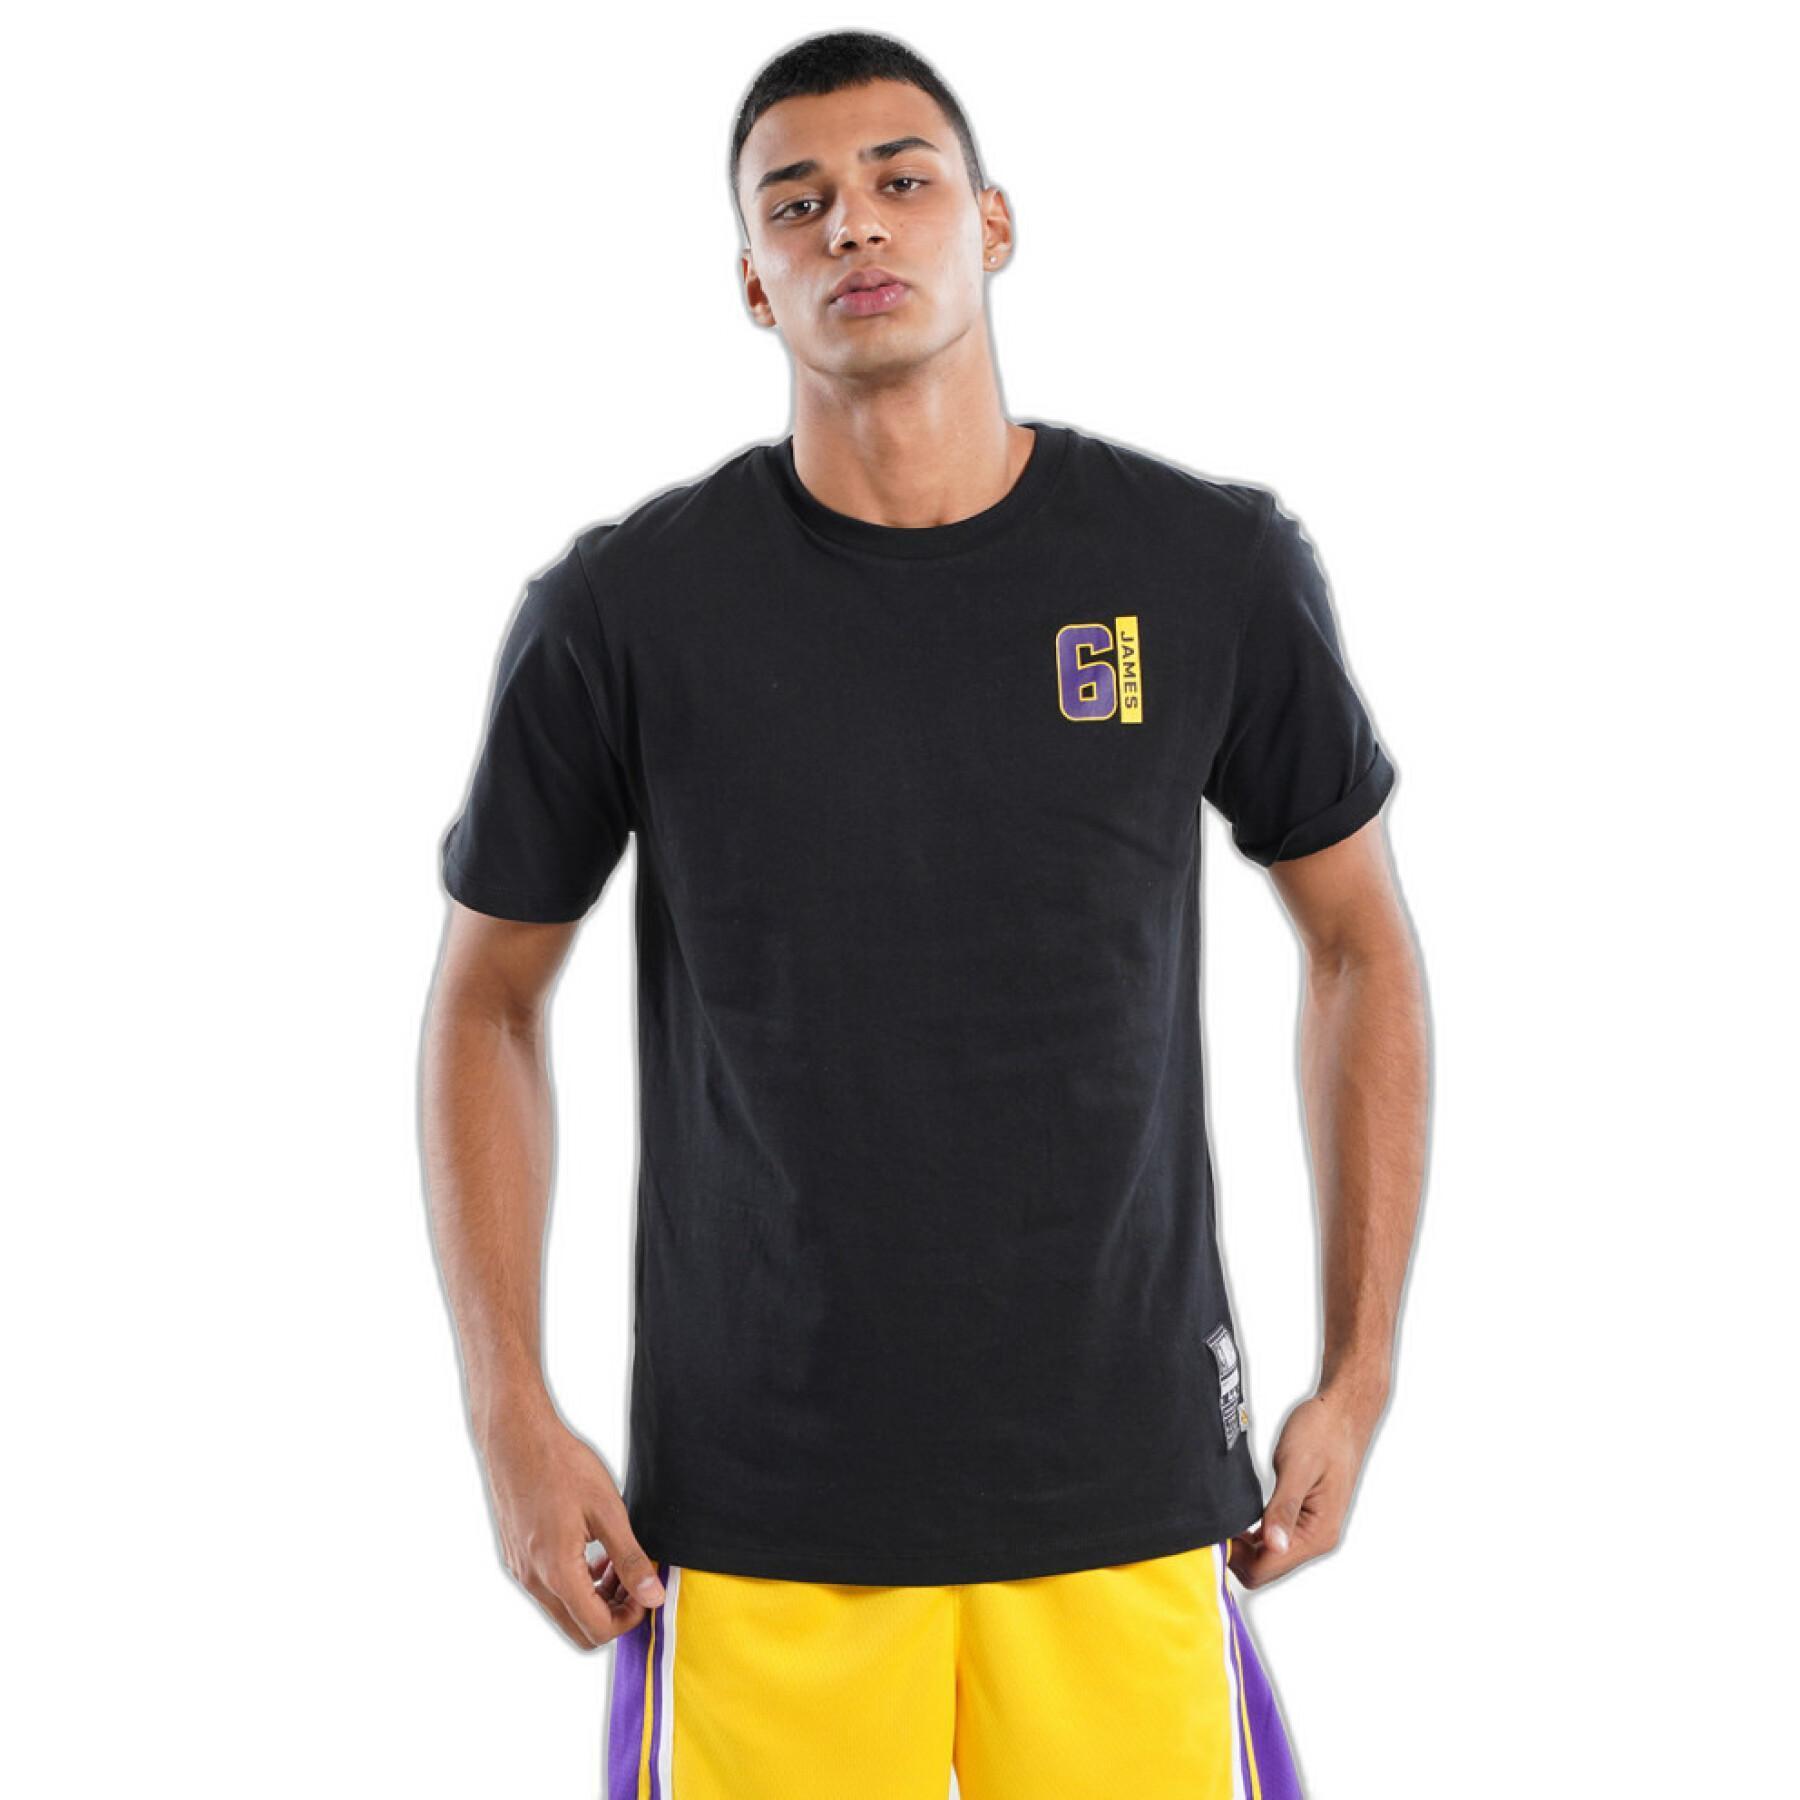 Camiseta Los Angeles Lakers Lebron James